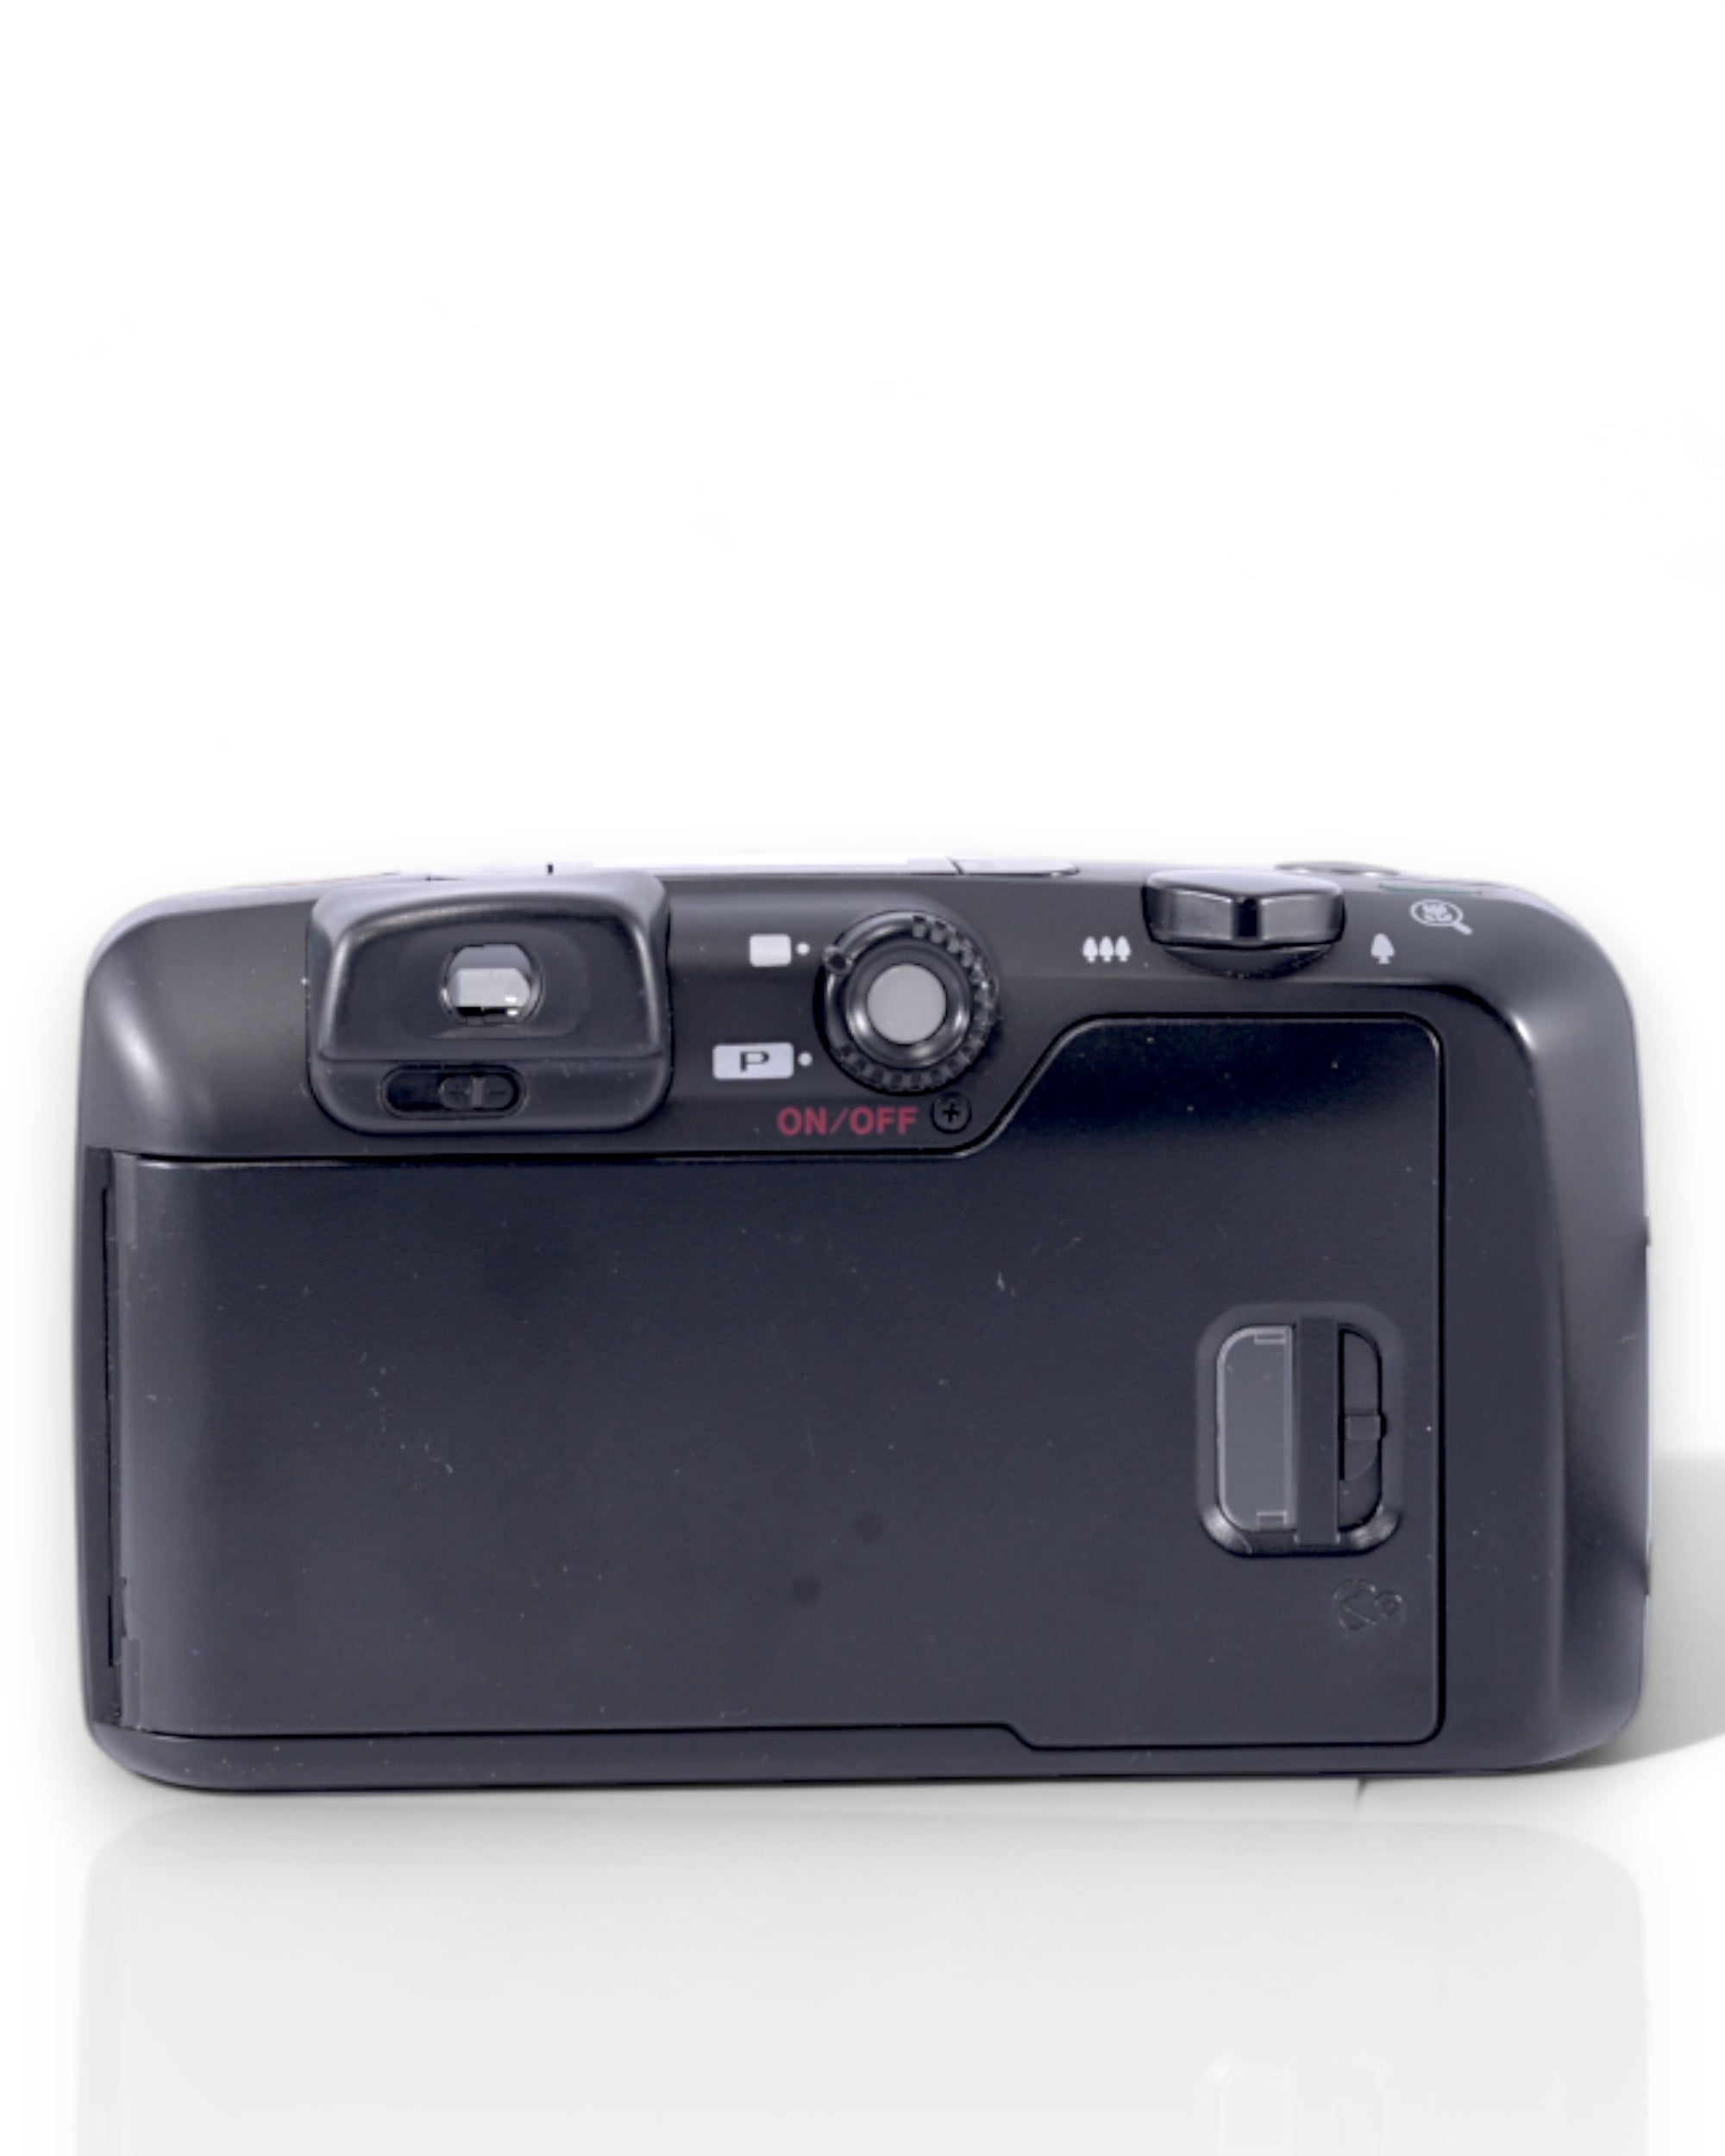 Pentax Espio 120 35mm Point & Shoot film camera with 38-120mm zoom lens